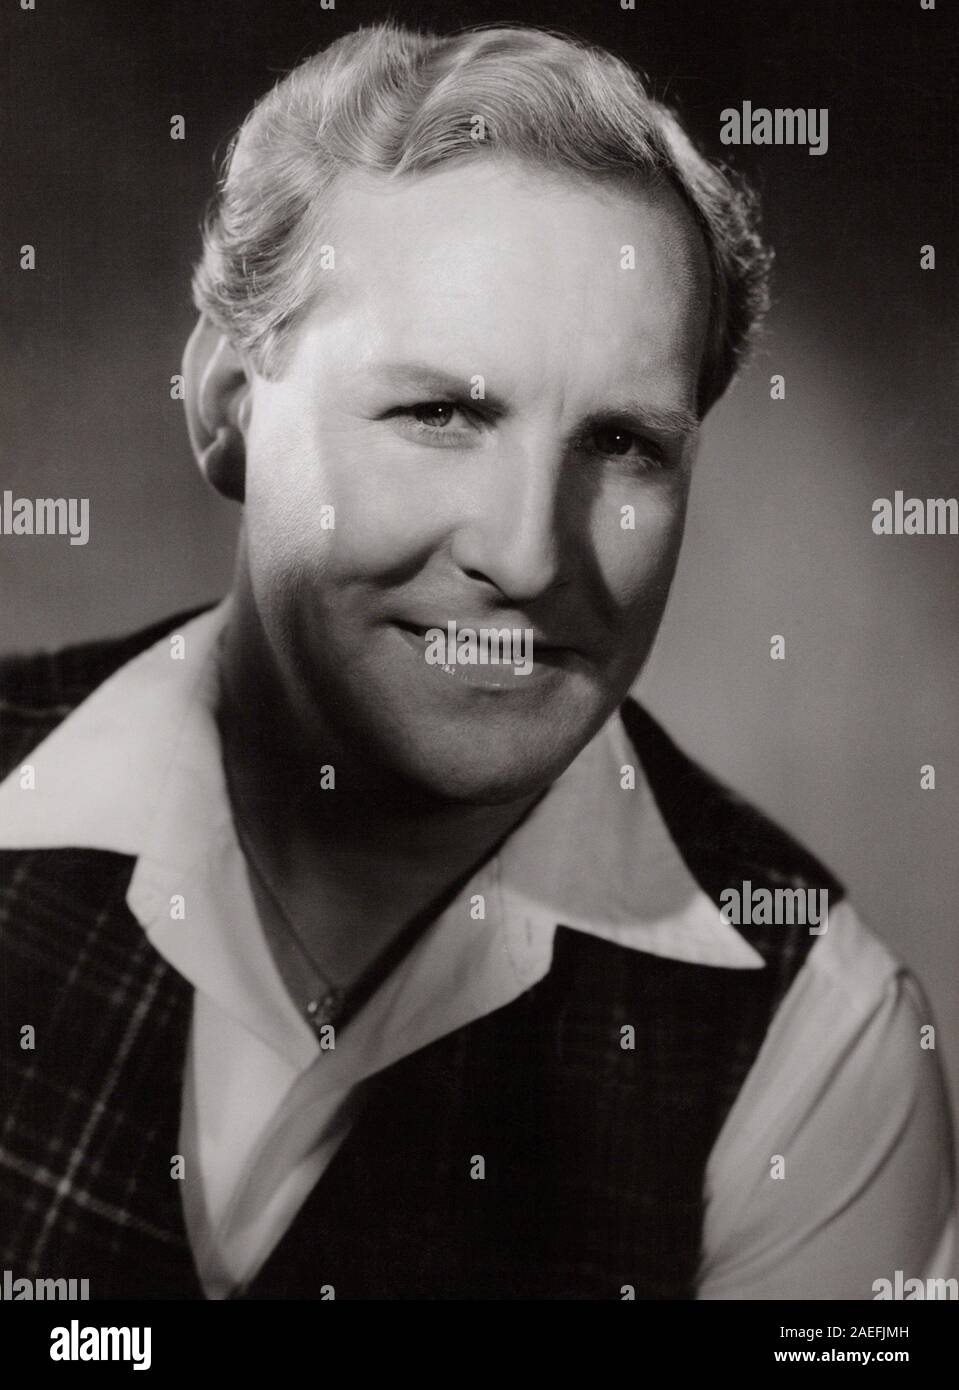 Jon Bratt Otnes, norwegischer Opernsänger, Deutschland um 1956. Norwegian opera singer Jon Bratt Otnes, Germany around 1956. Stock Photo